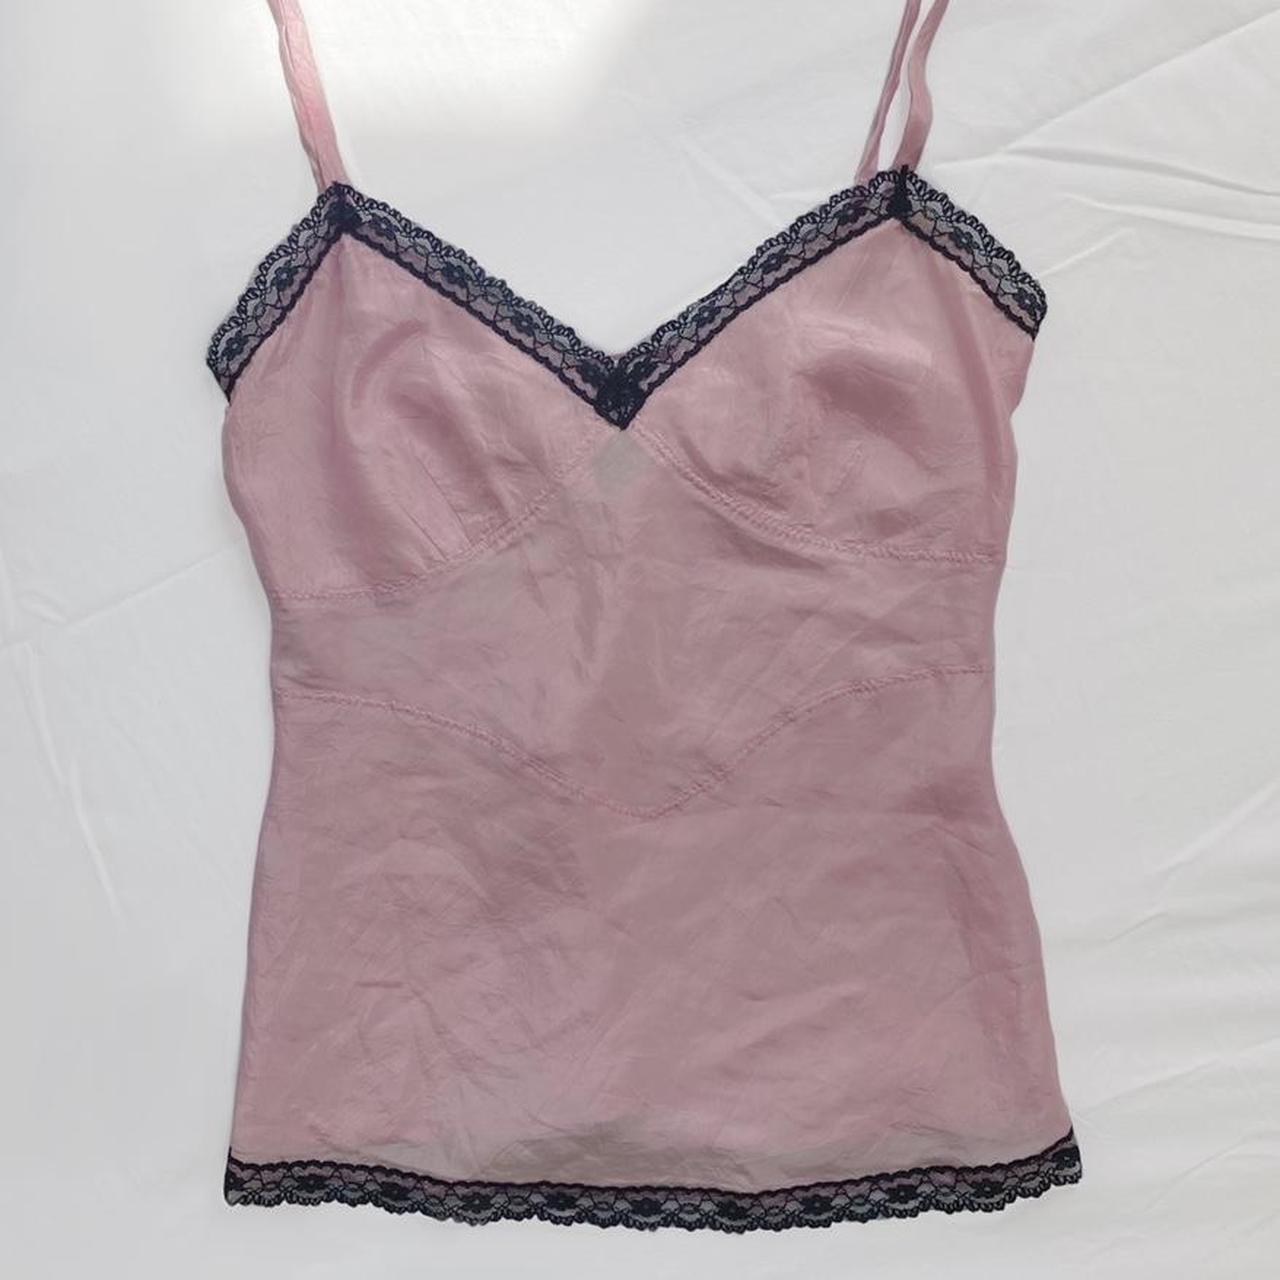 Super cute 100% silk pink cami top with black lace... - Depop